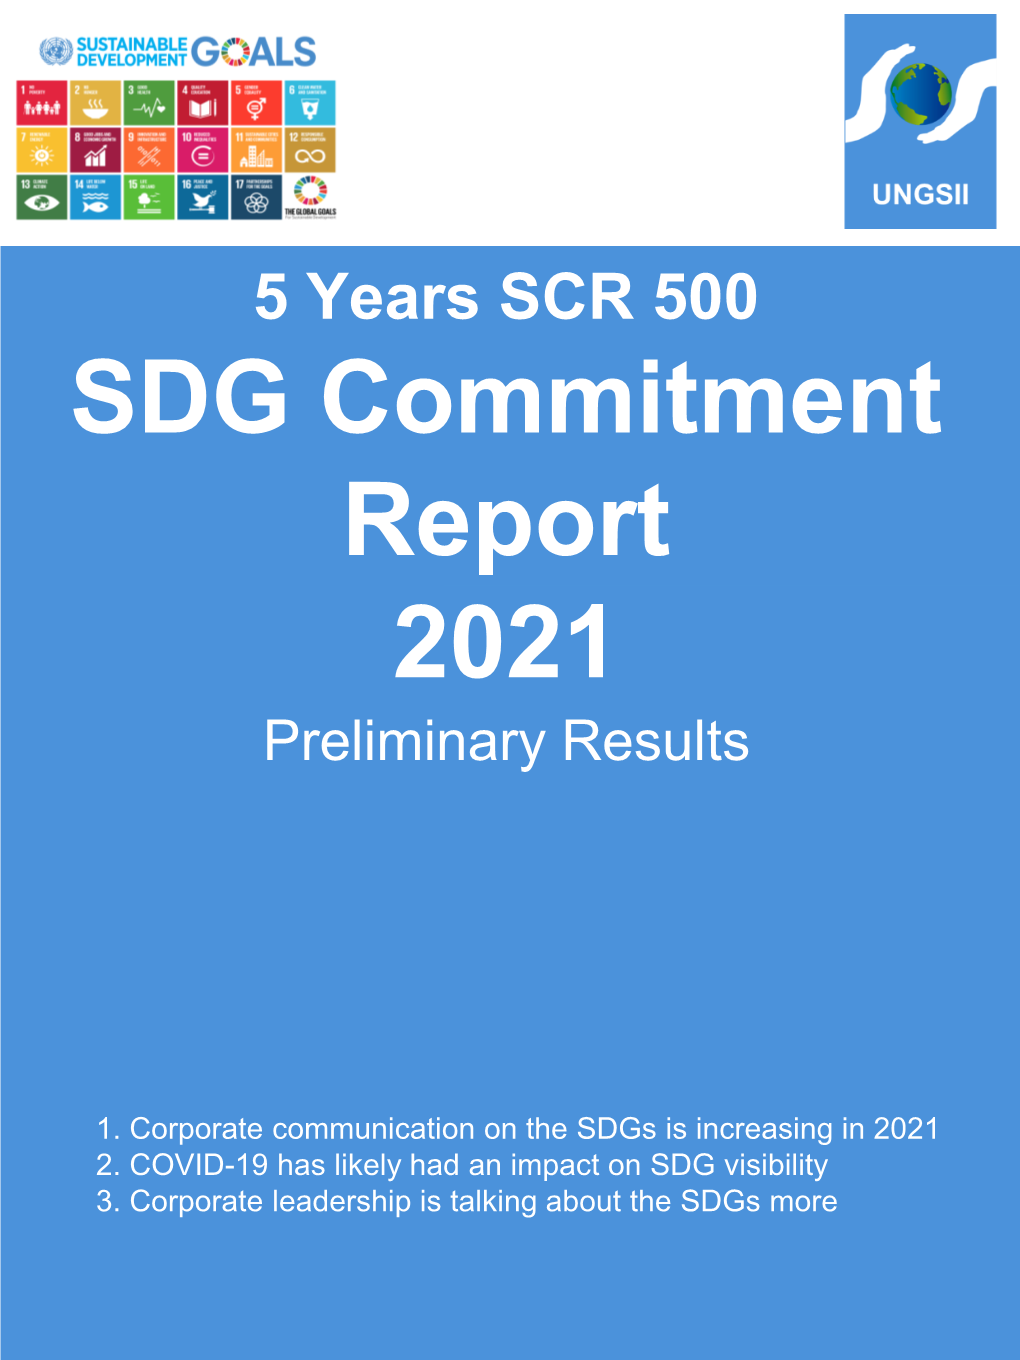 SDG Commitment Report 2021 Preliminary Results